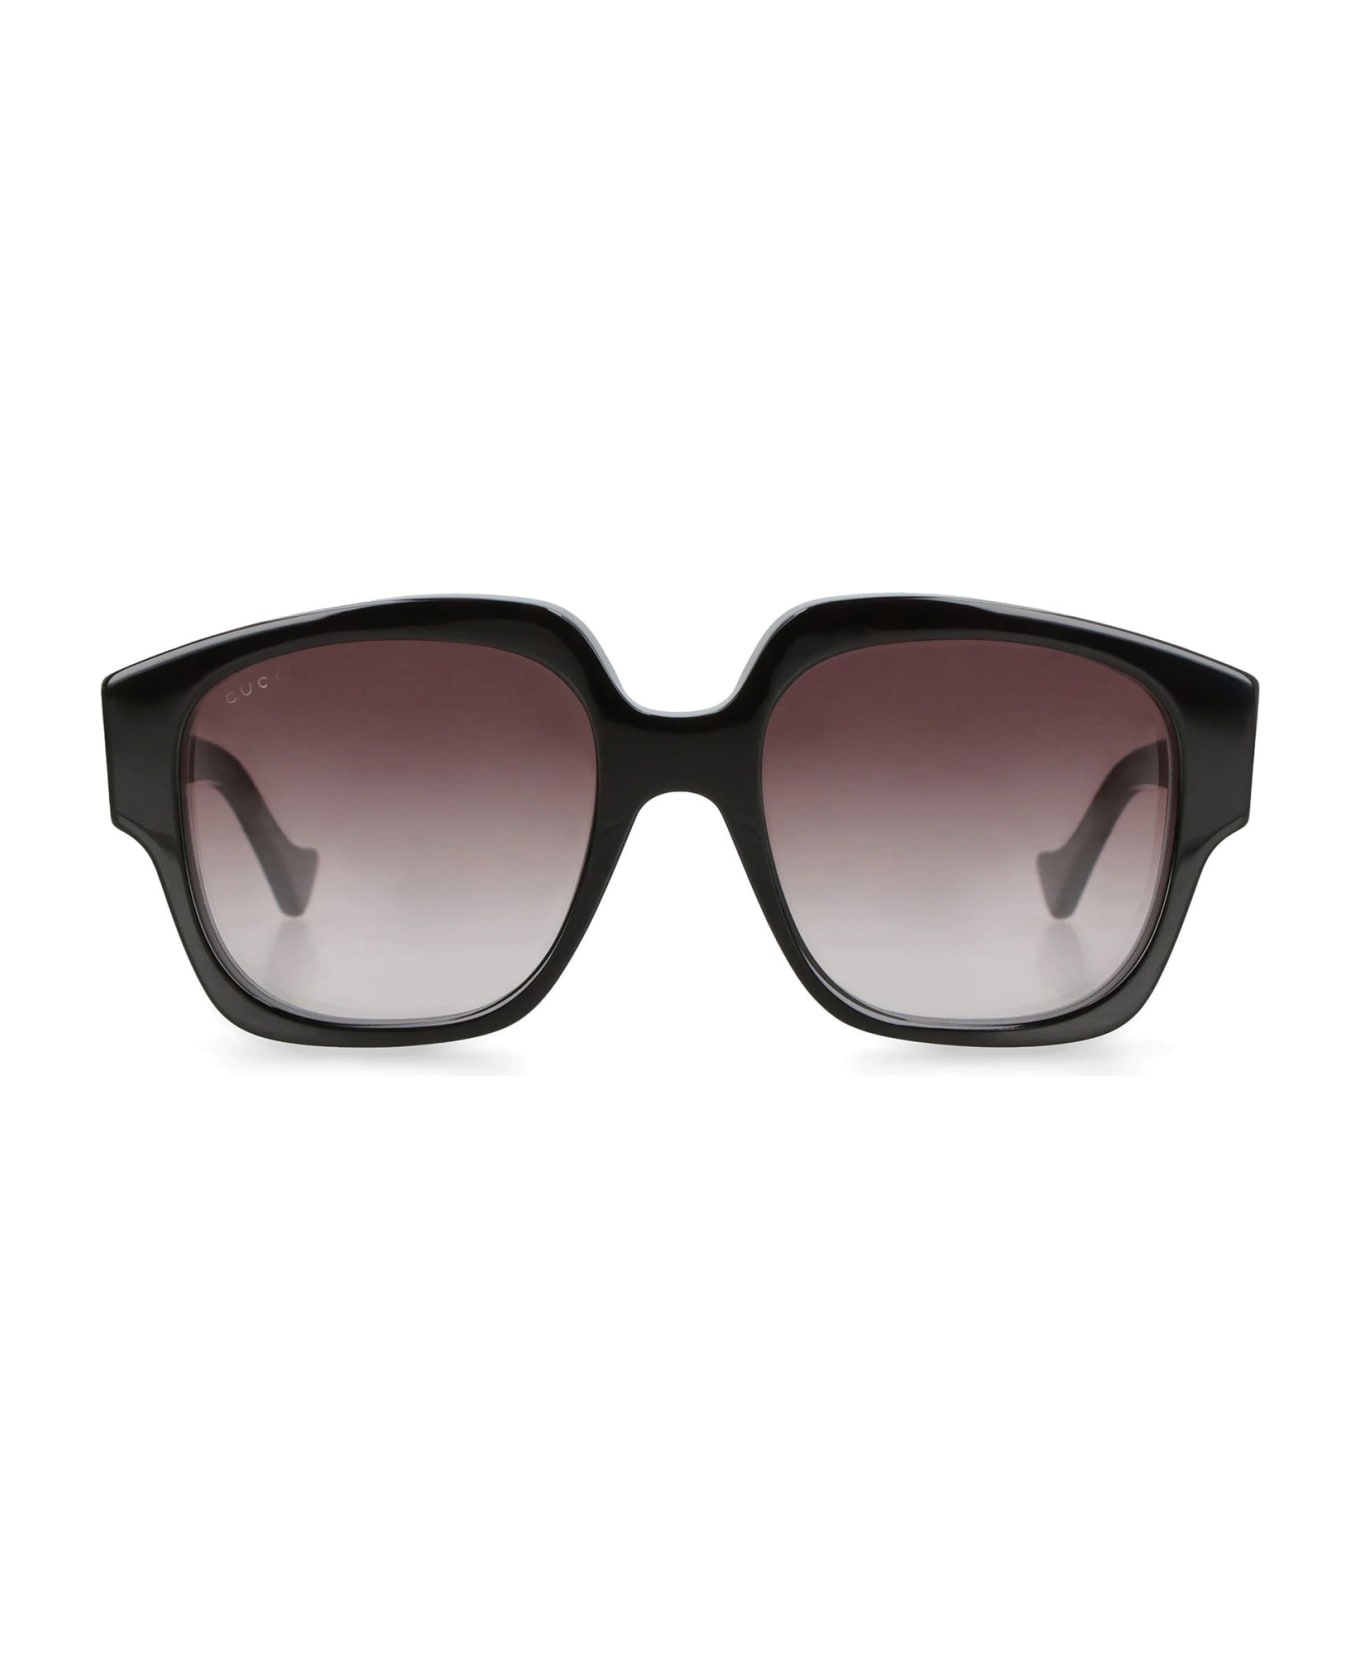 Gucci Eyewear Square Frame Sunglasses - Brown サングラス